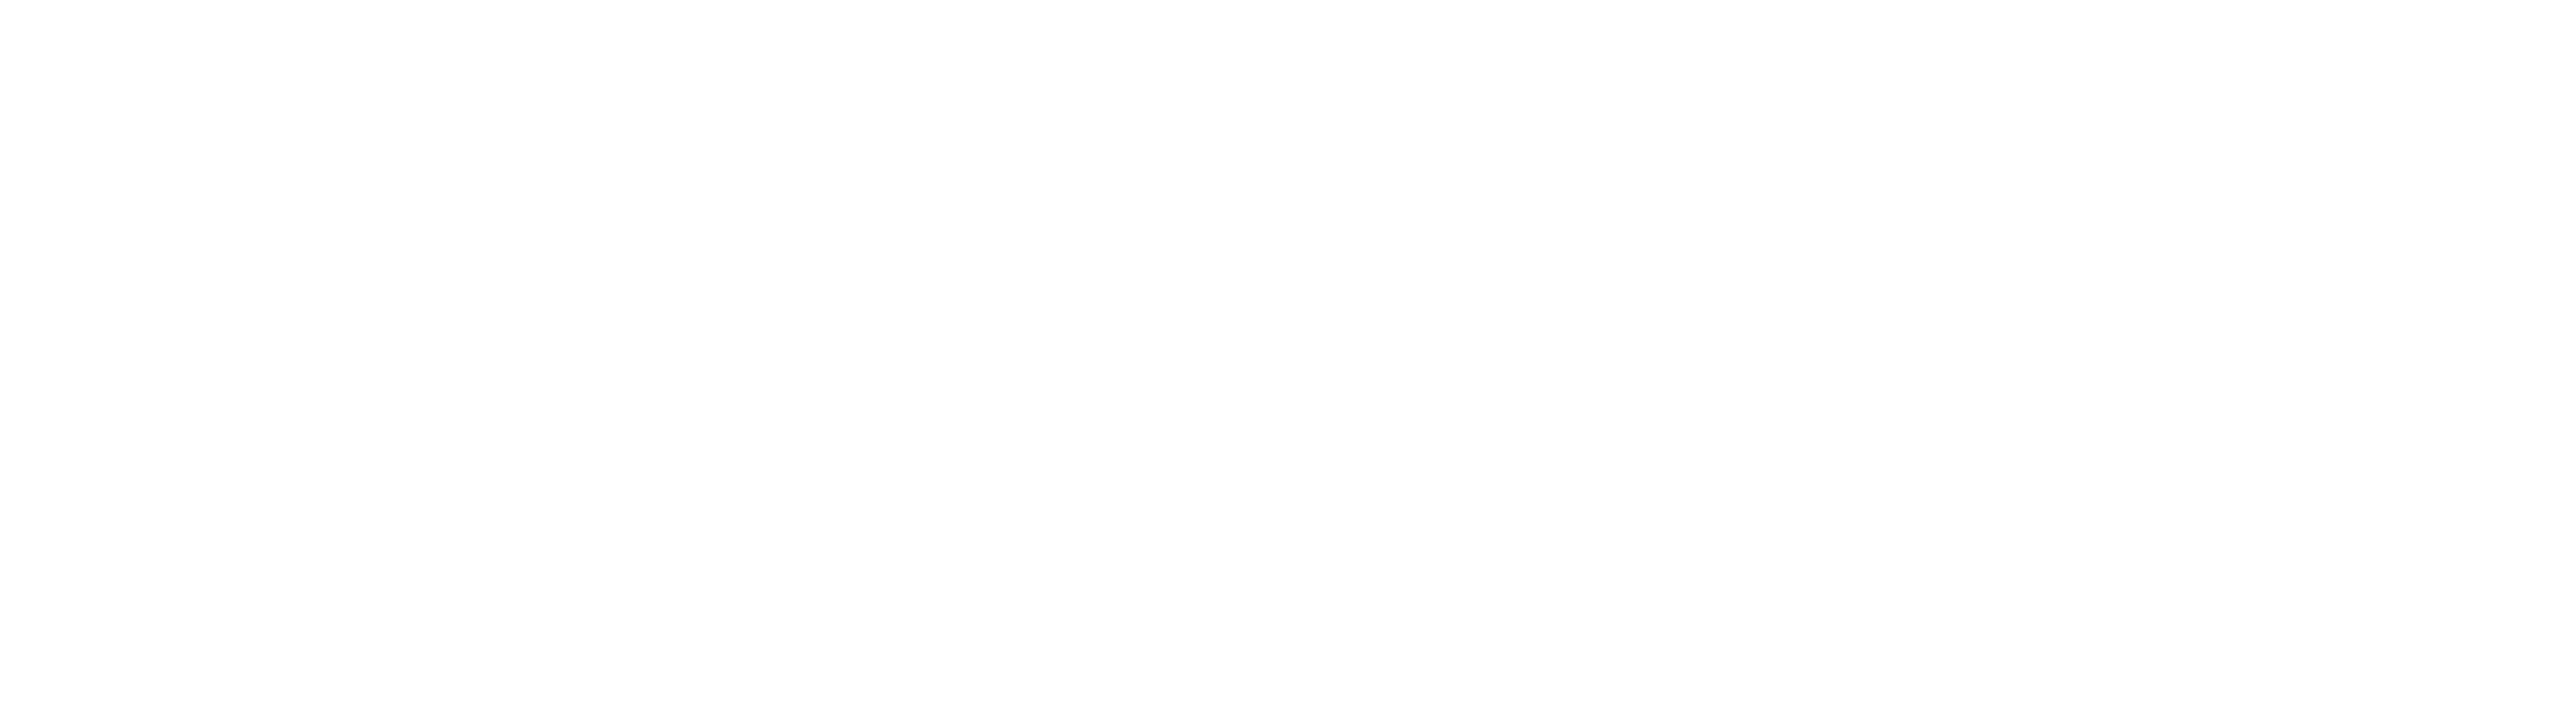 Emdad Energy logo